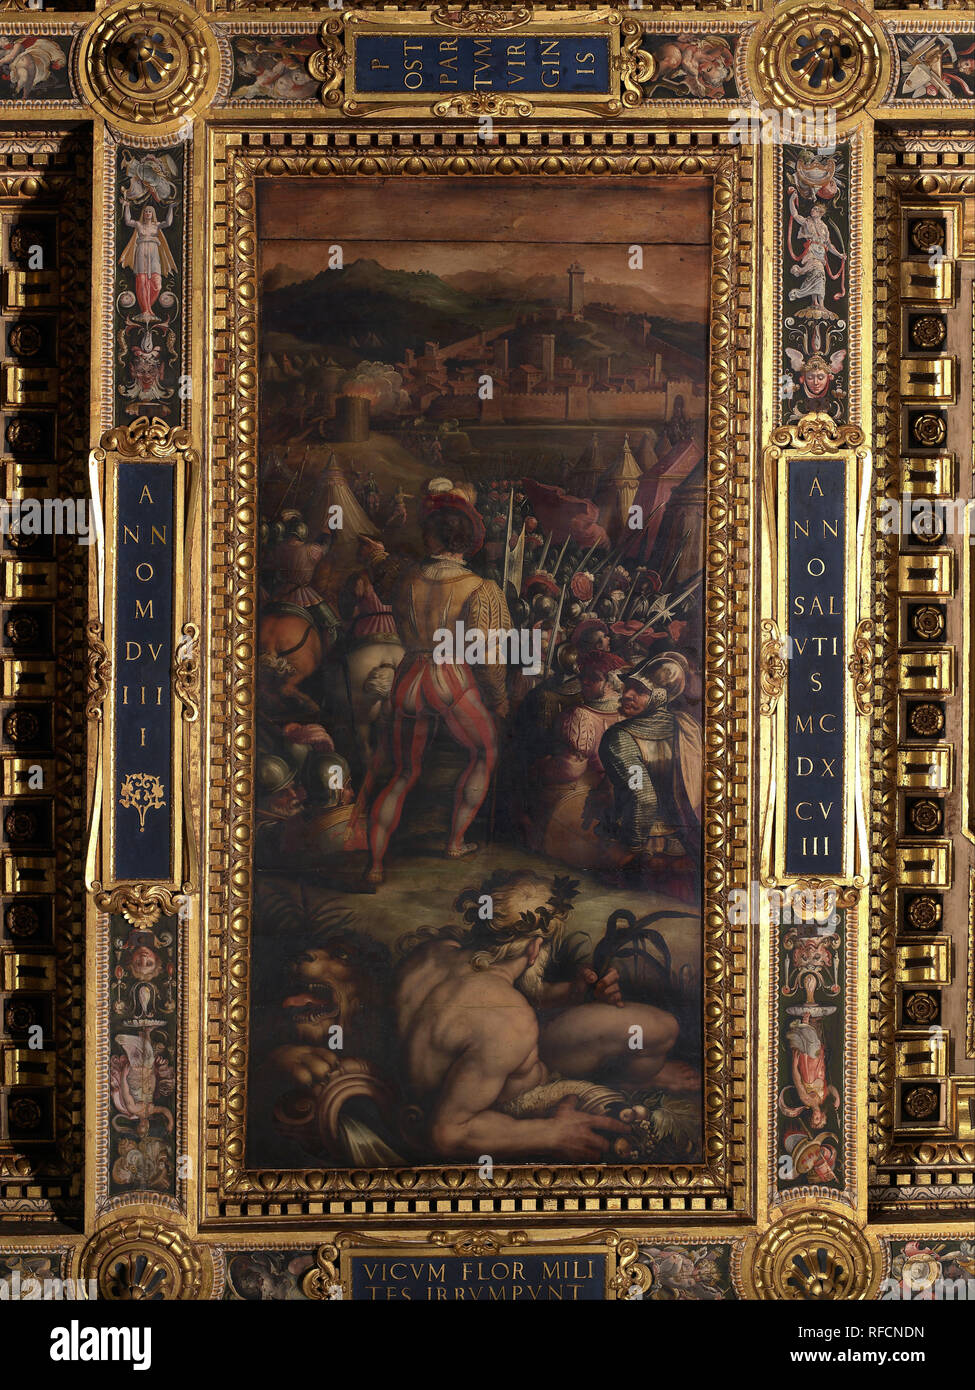 Capture of Vicopisano. Date/Period: 1563 - 1565. Oil painting on wood. Height: 250 mm (9.84 in); Width: 540 mm (21.25 in). Author: Giorgio Vasari. VASARI, GIORGIO. Stock Photo